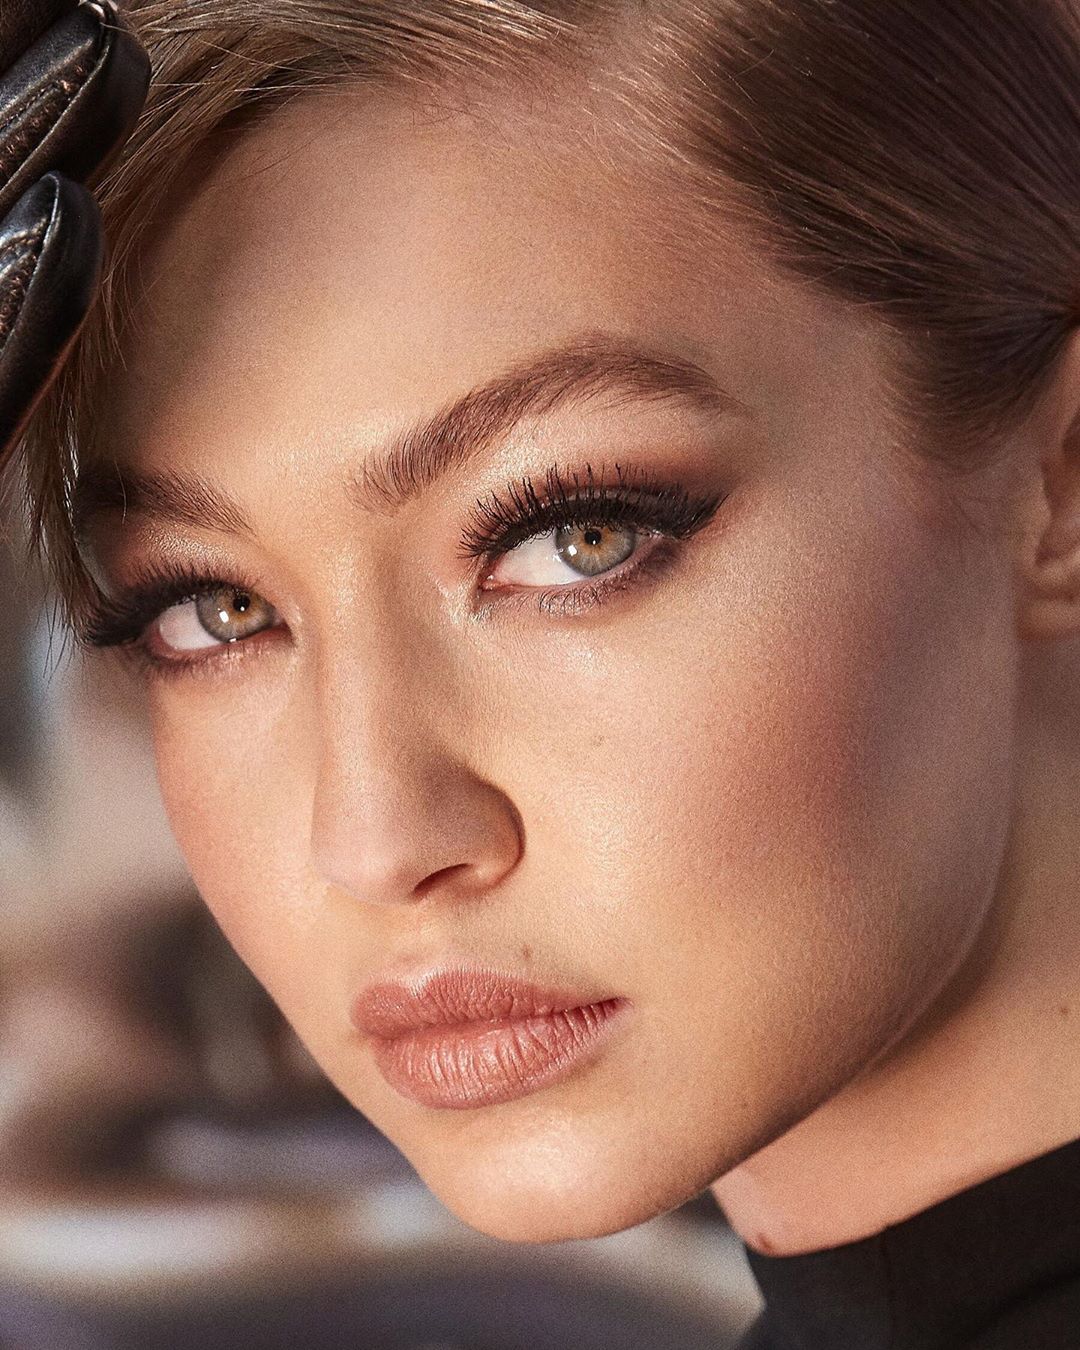 H makeup artist της Gigi Hadid μας δείχνει πώς να κάνουμε το fox eye makeup που είναι τάση!